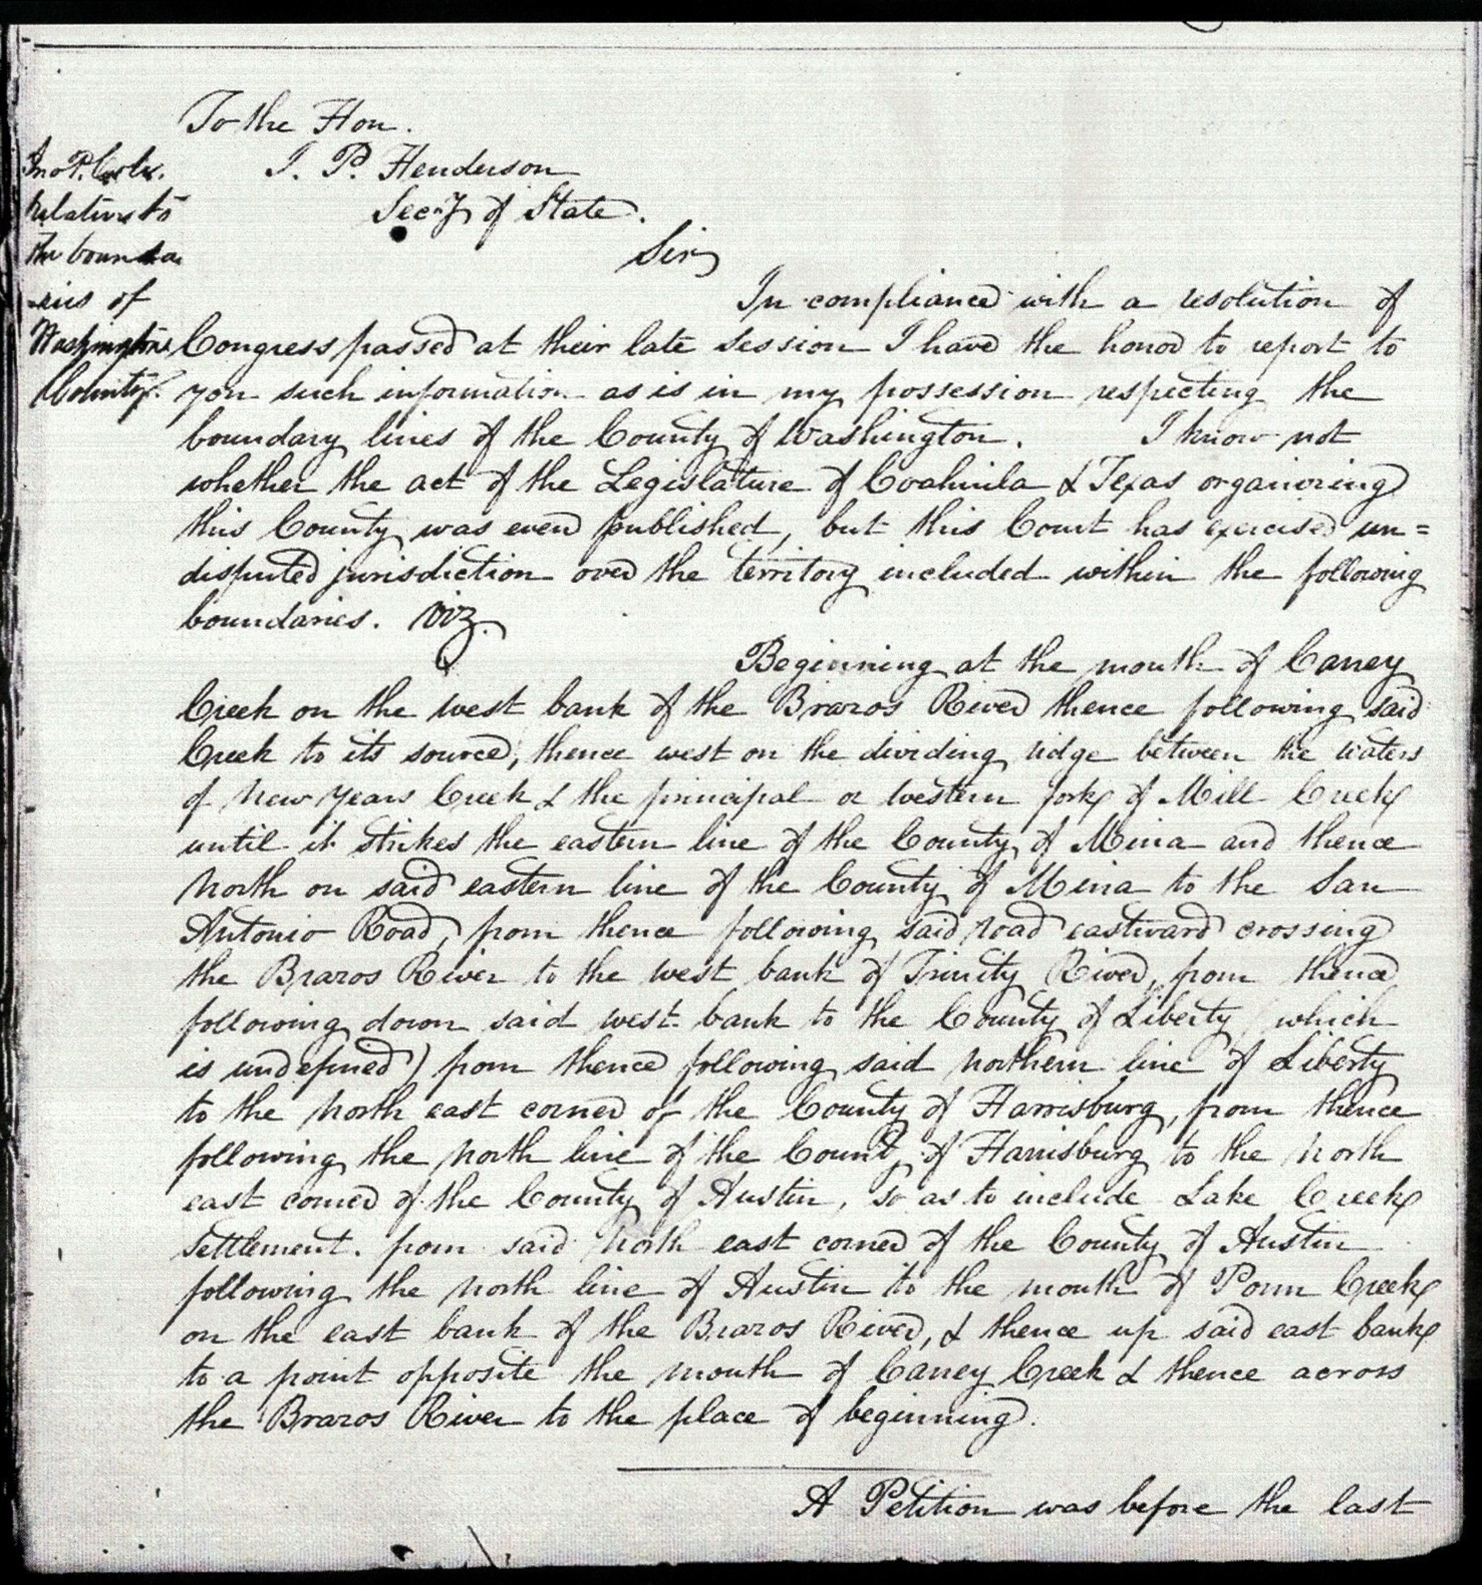 Primary Source Document for John P. Coles' Original Description of the Boundaries of 
  Washington County